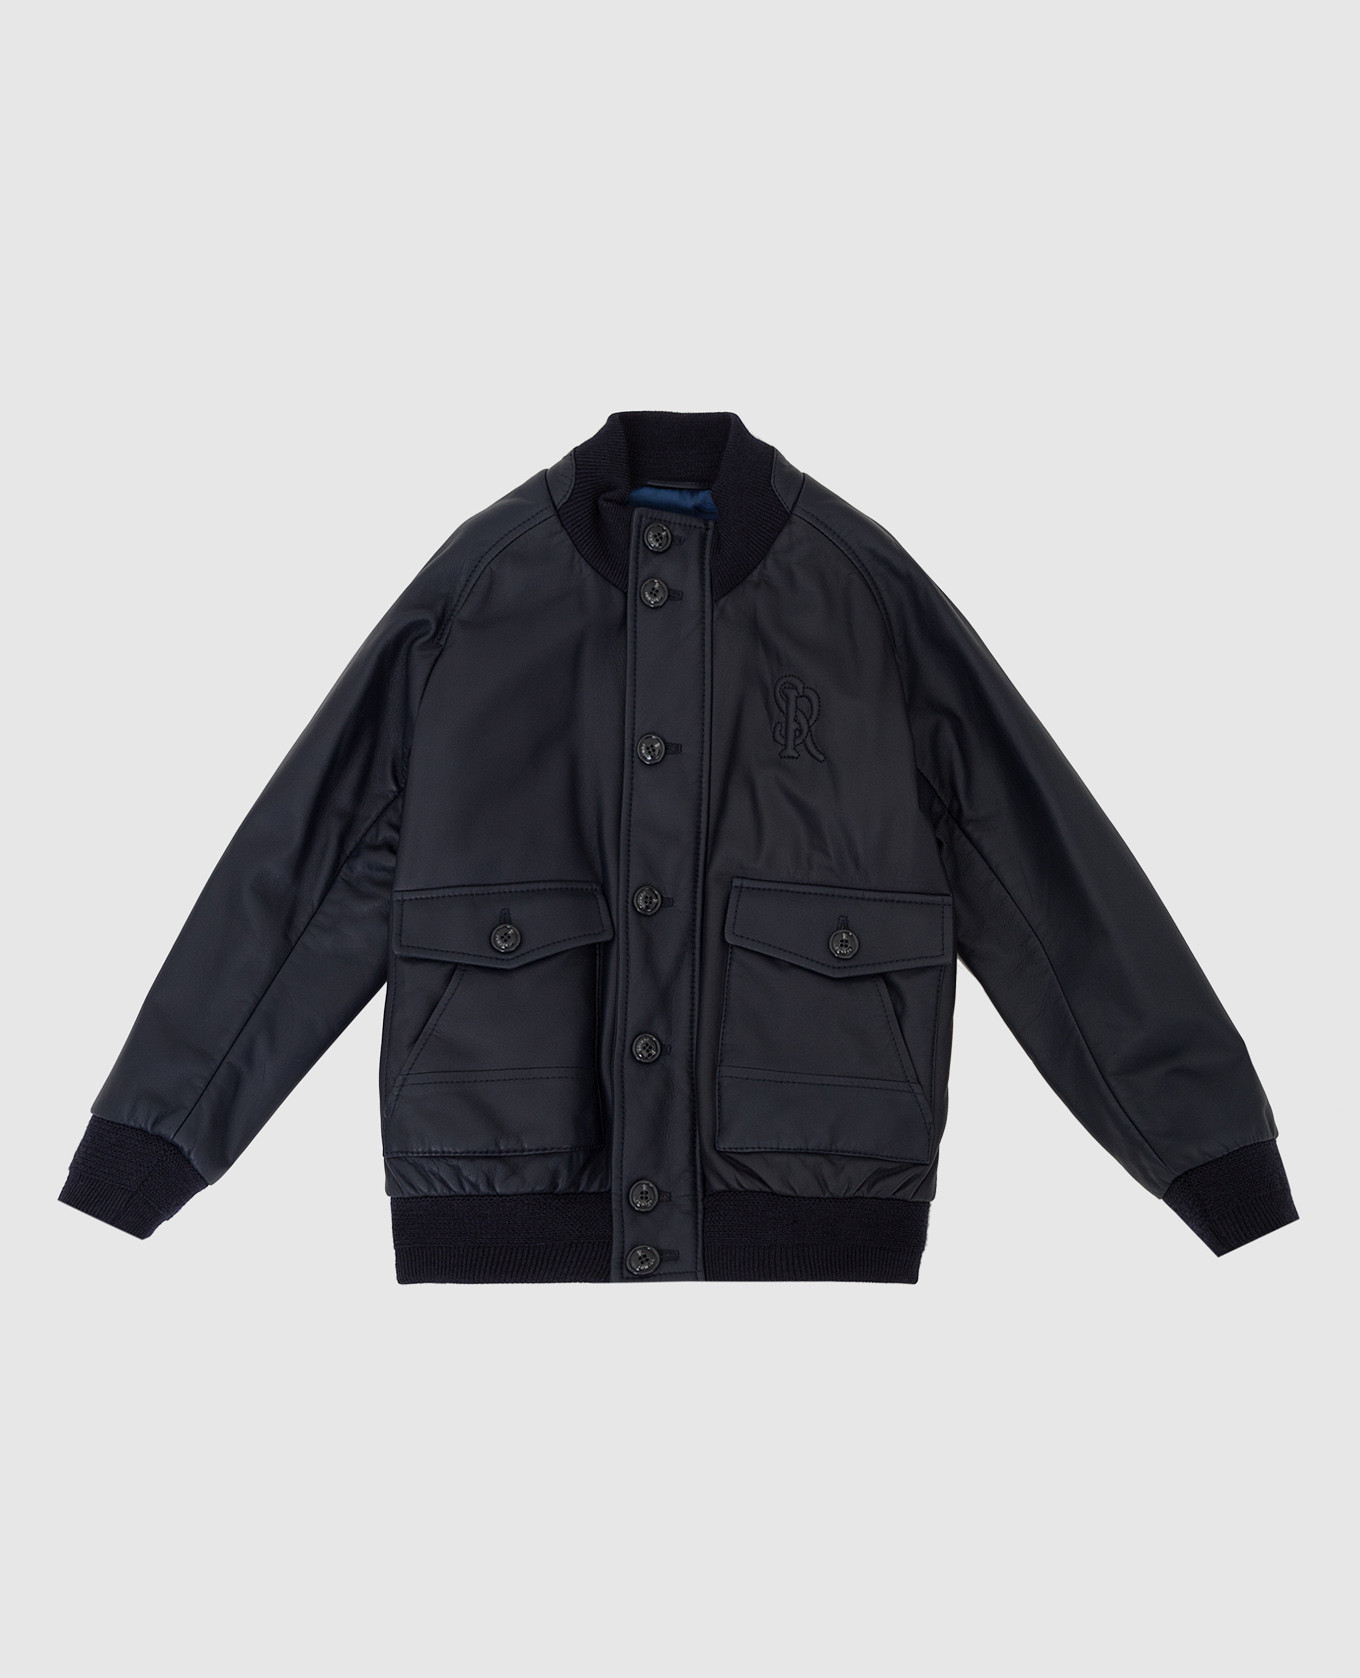 Children's navy blue leather bomber jacket